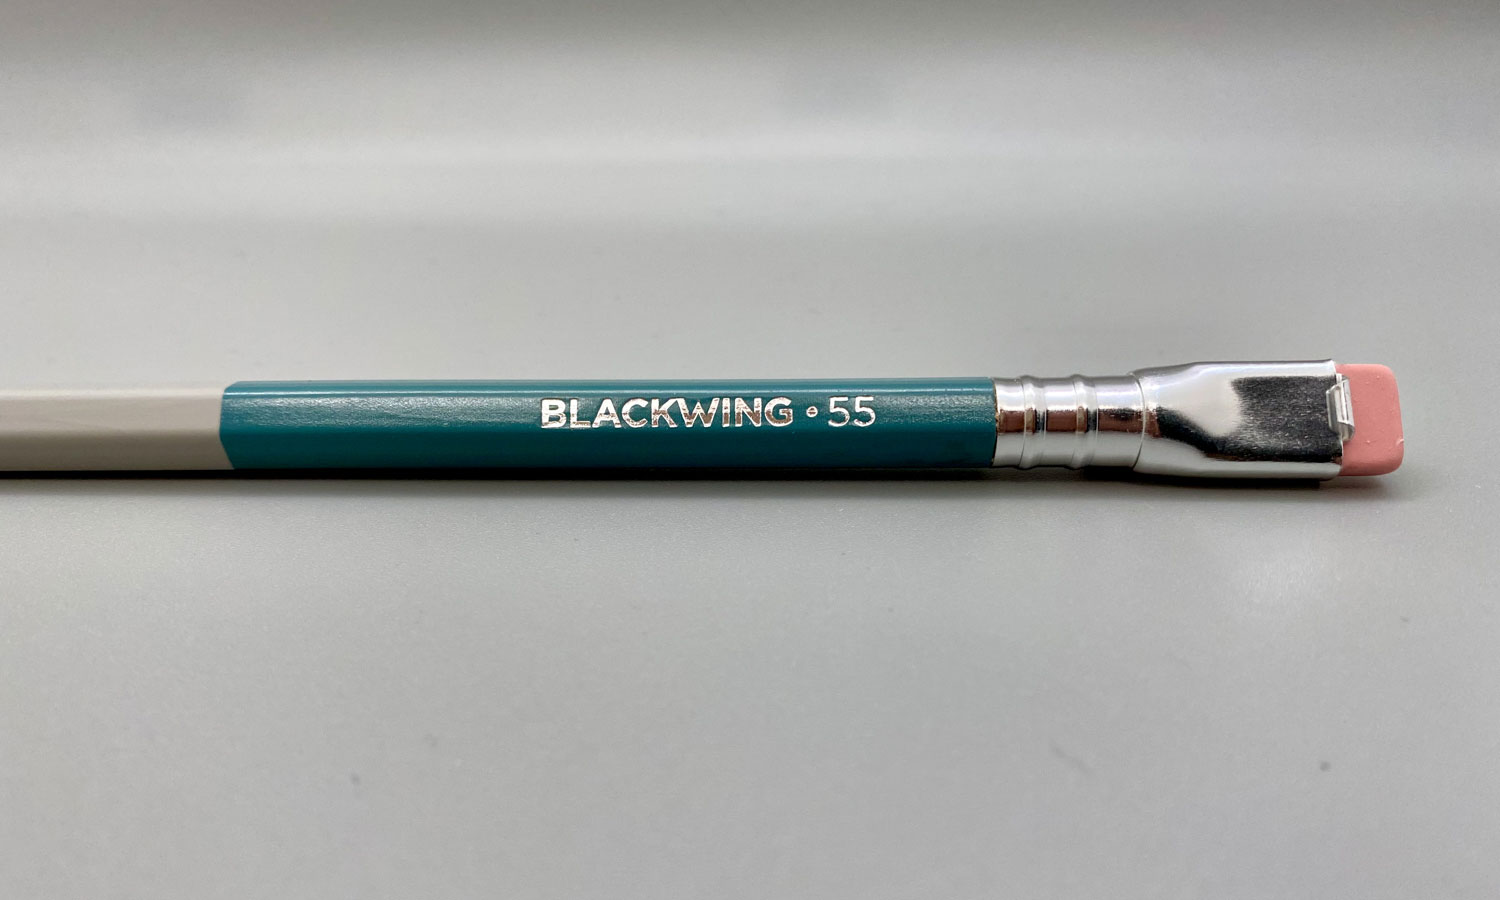 blackwing volume 55 pencil